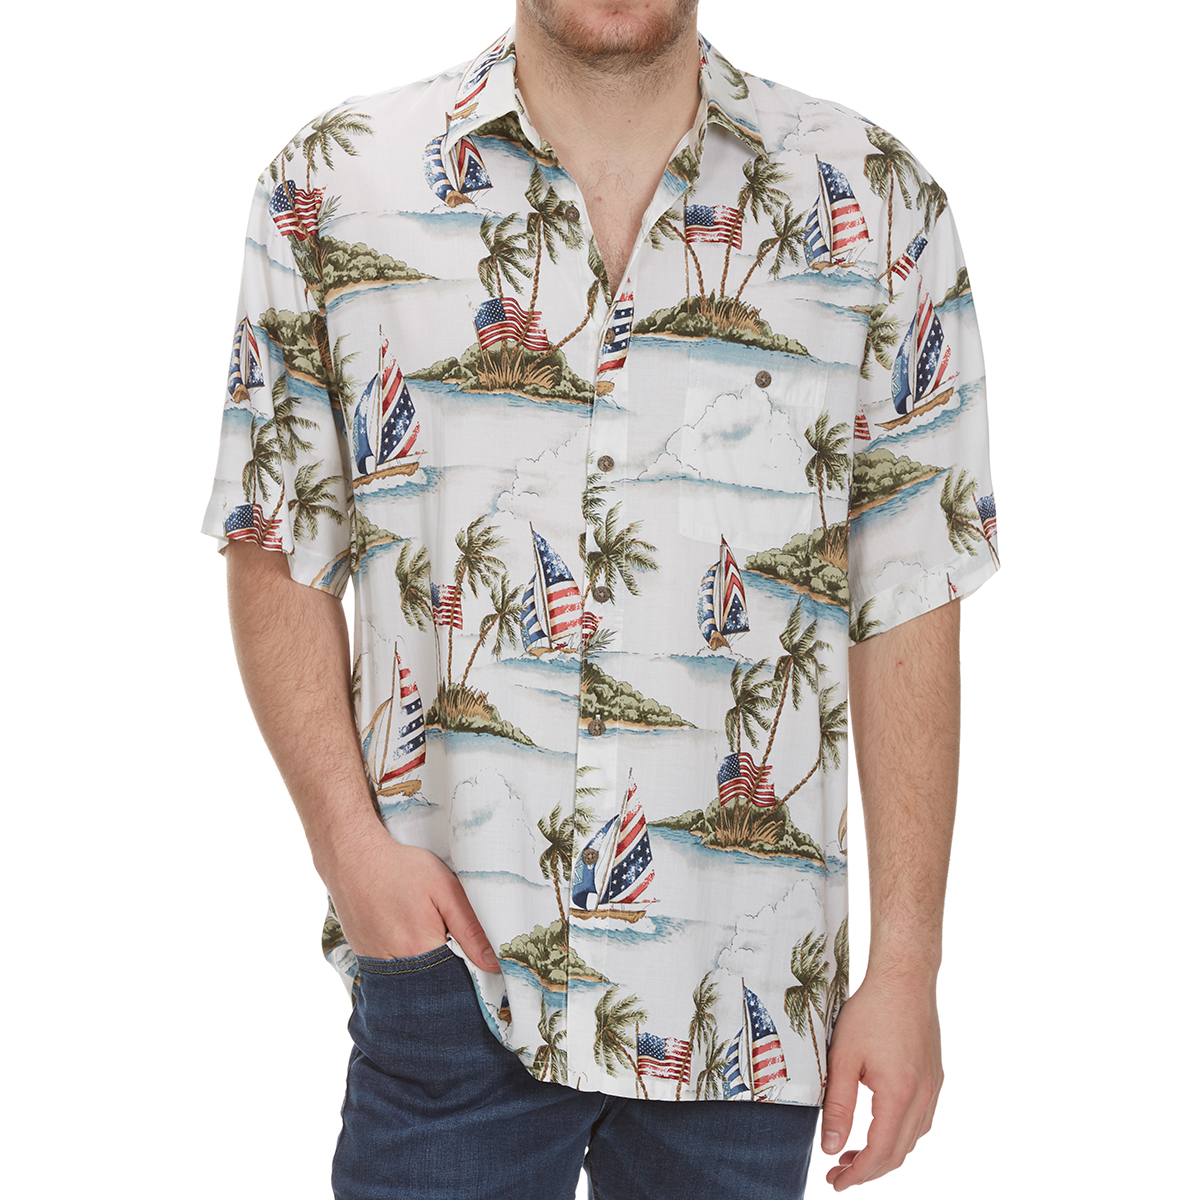 CAMPIA MODA Men's Tropical Island Flags Short-Sleeve Shirt - Bob's Stores